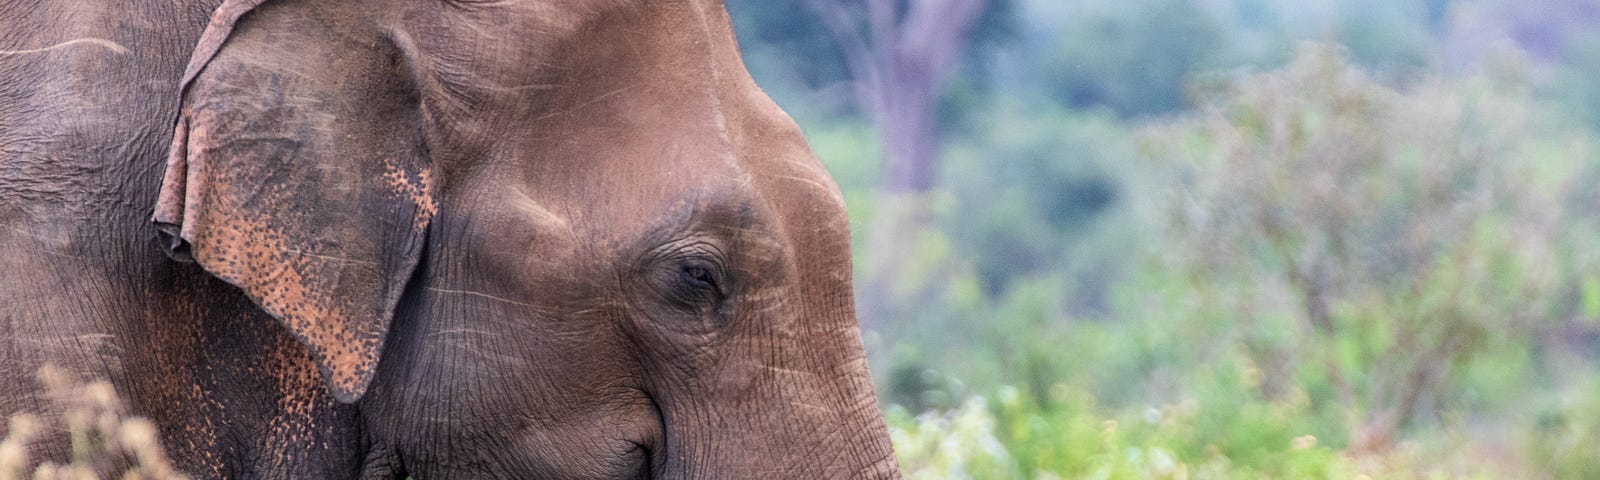 A Sri Lankan elephant’s head profiled in the backdrop of a field.